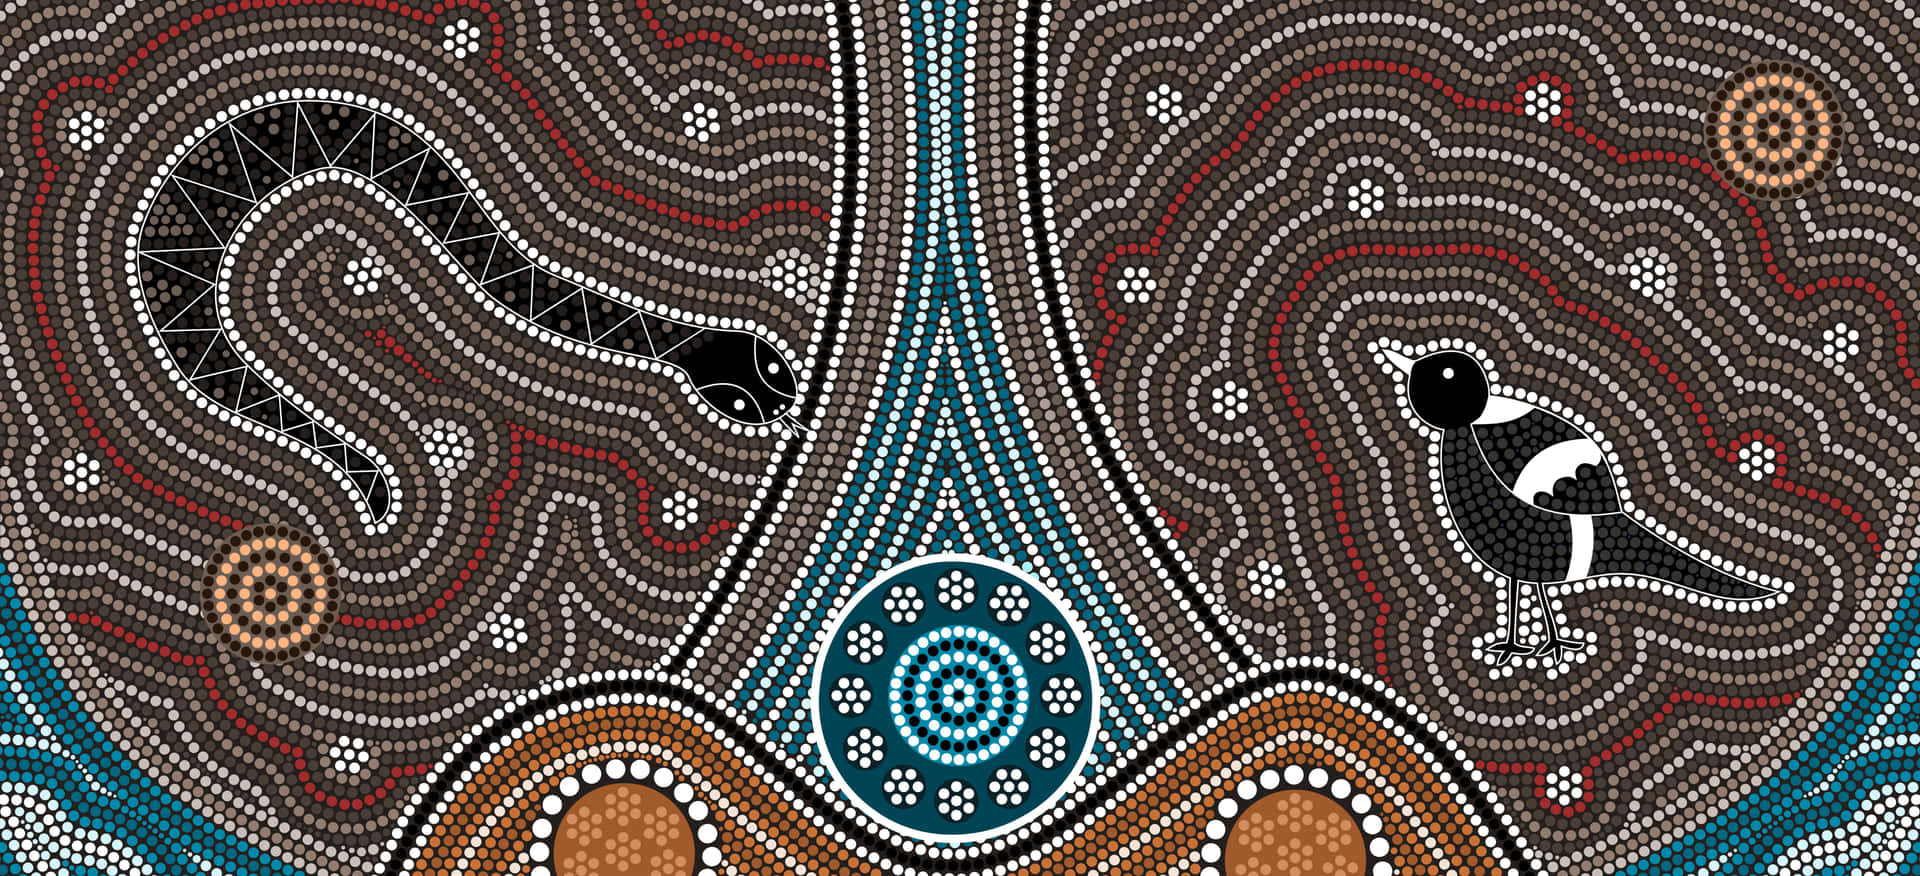 Aboriginal Art With A Snake And A Bird